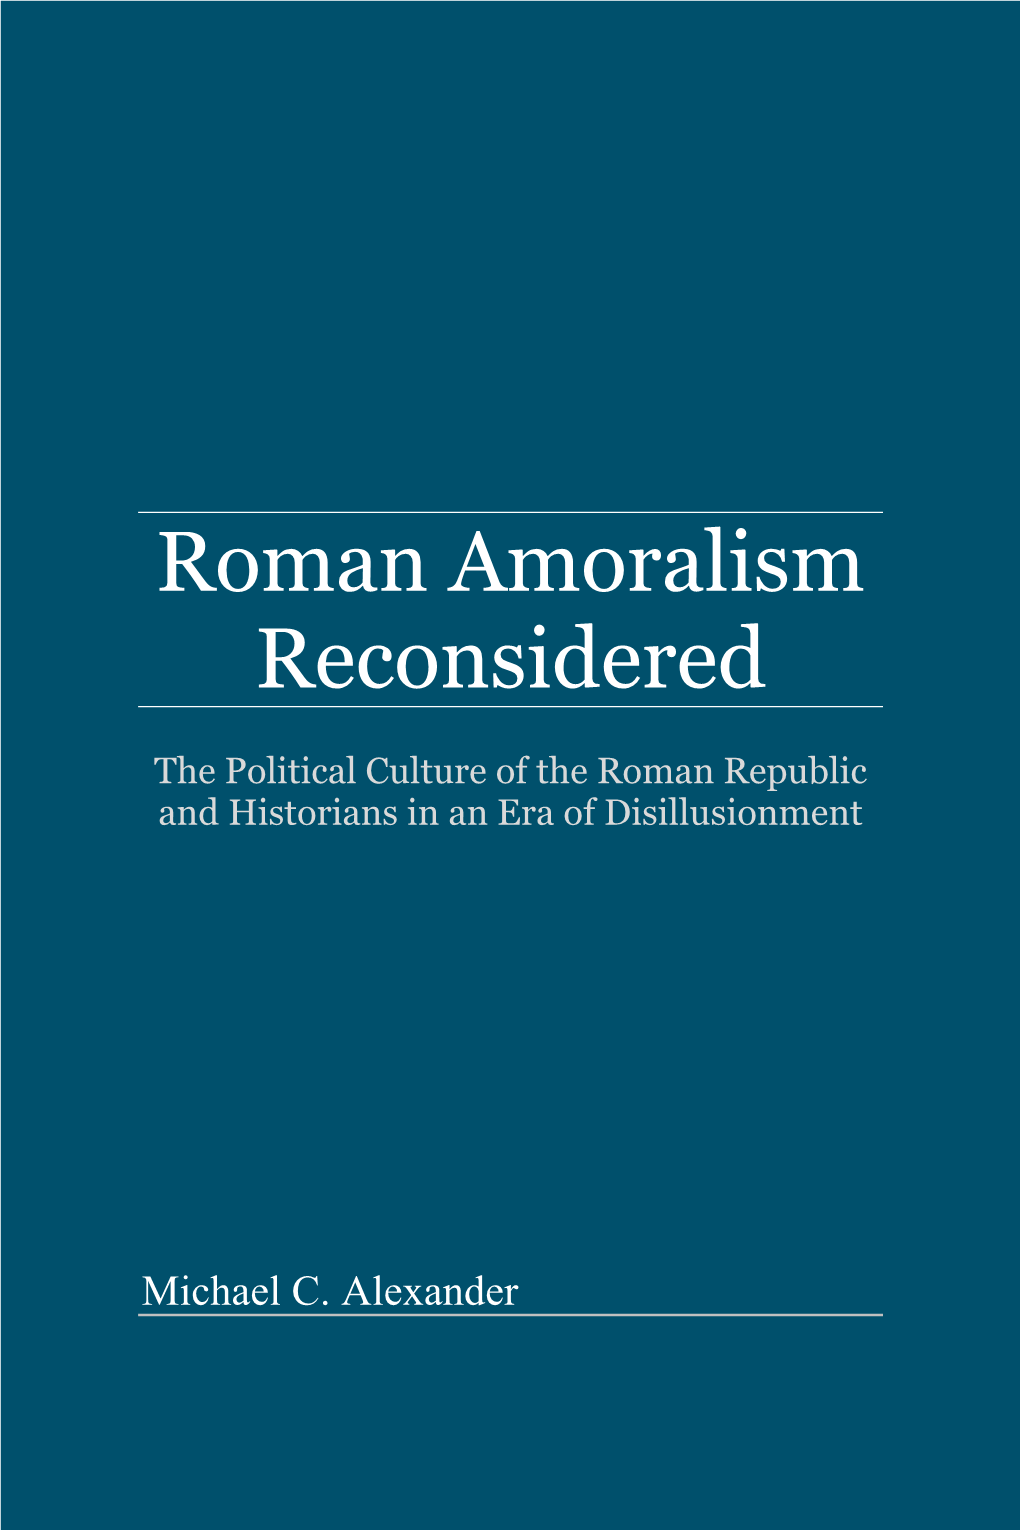 Roman Amoralism Reconsidered